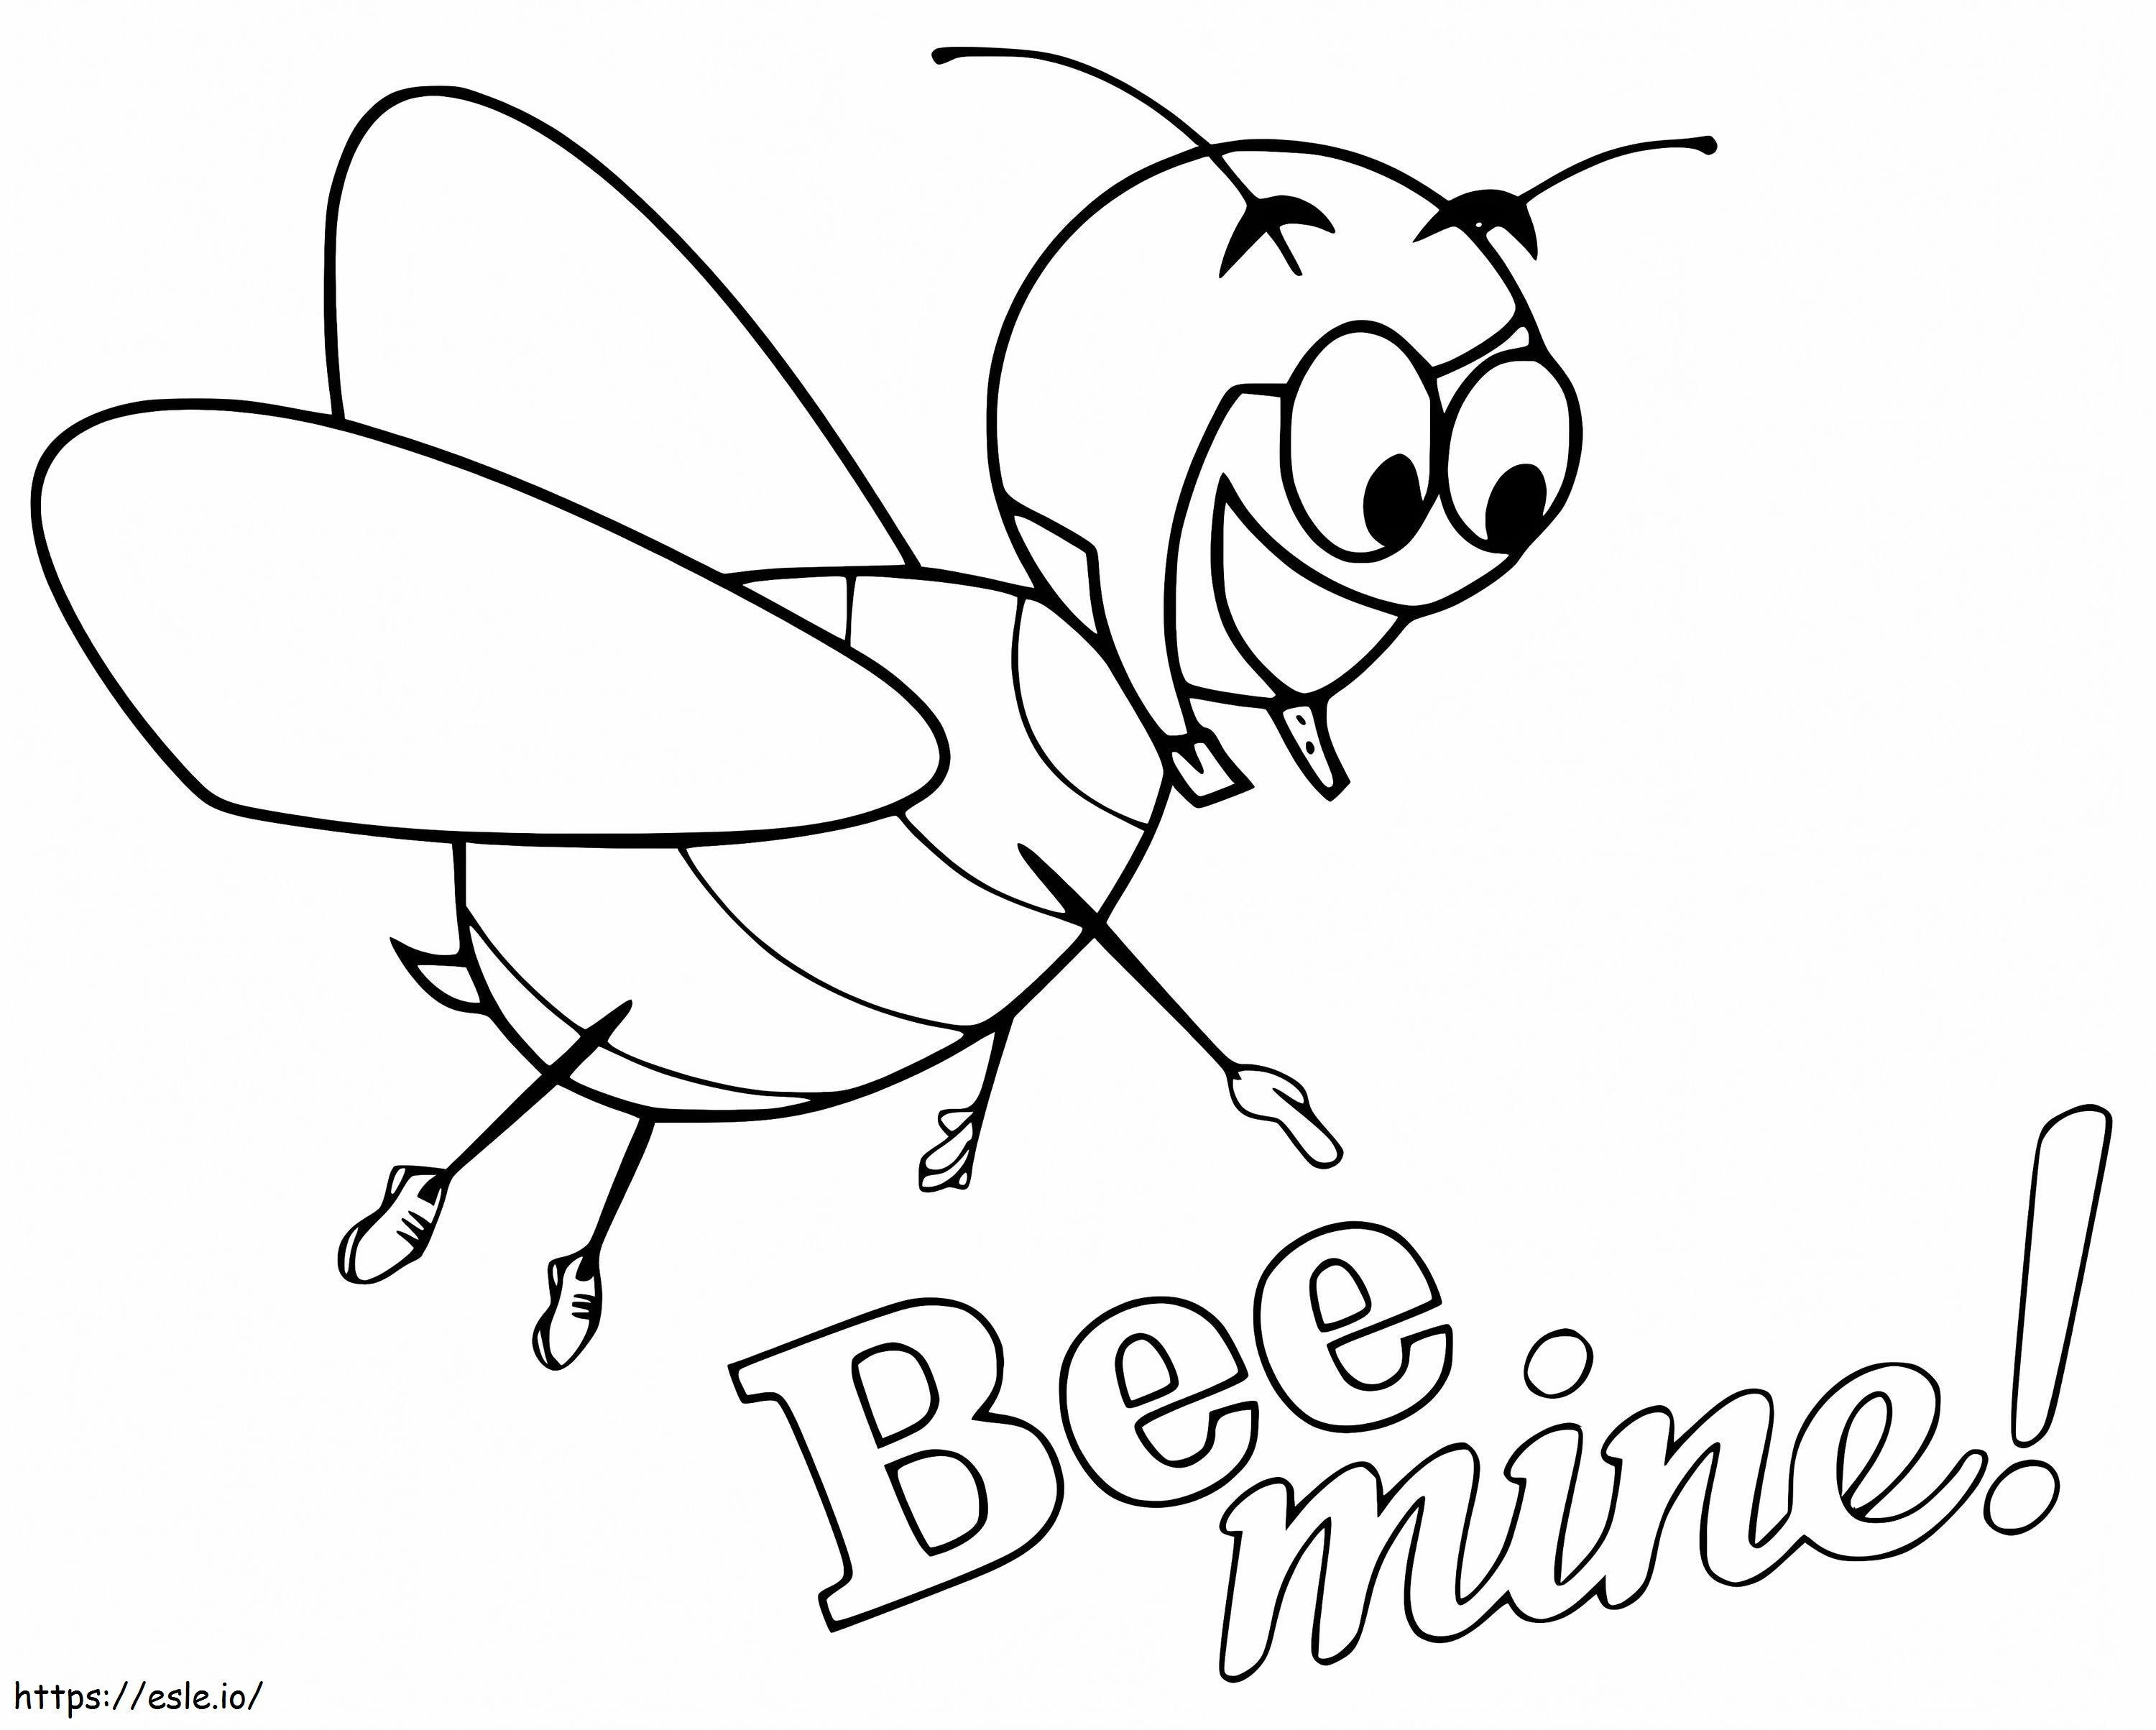 Nyomtatható Bee Mine kifestő